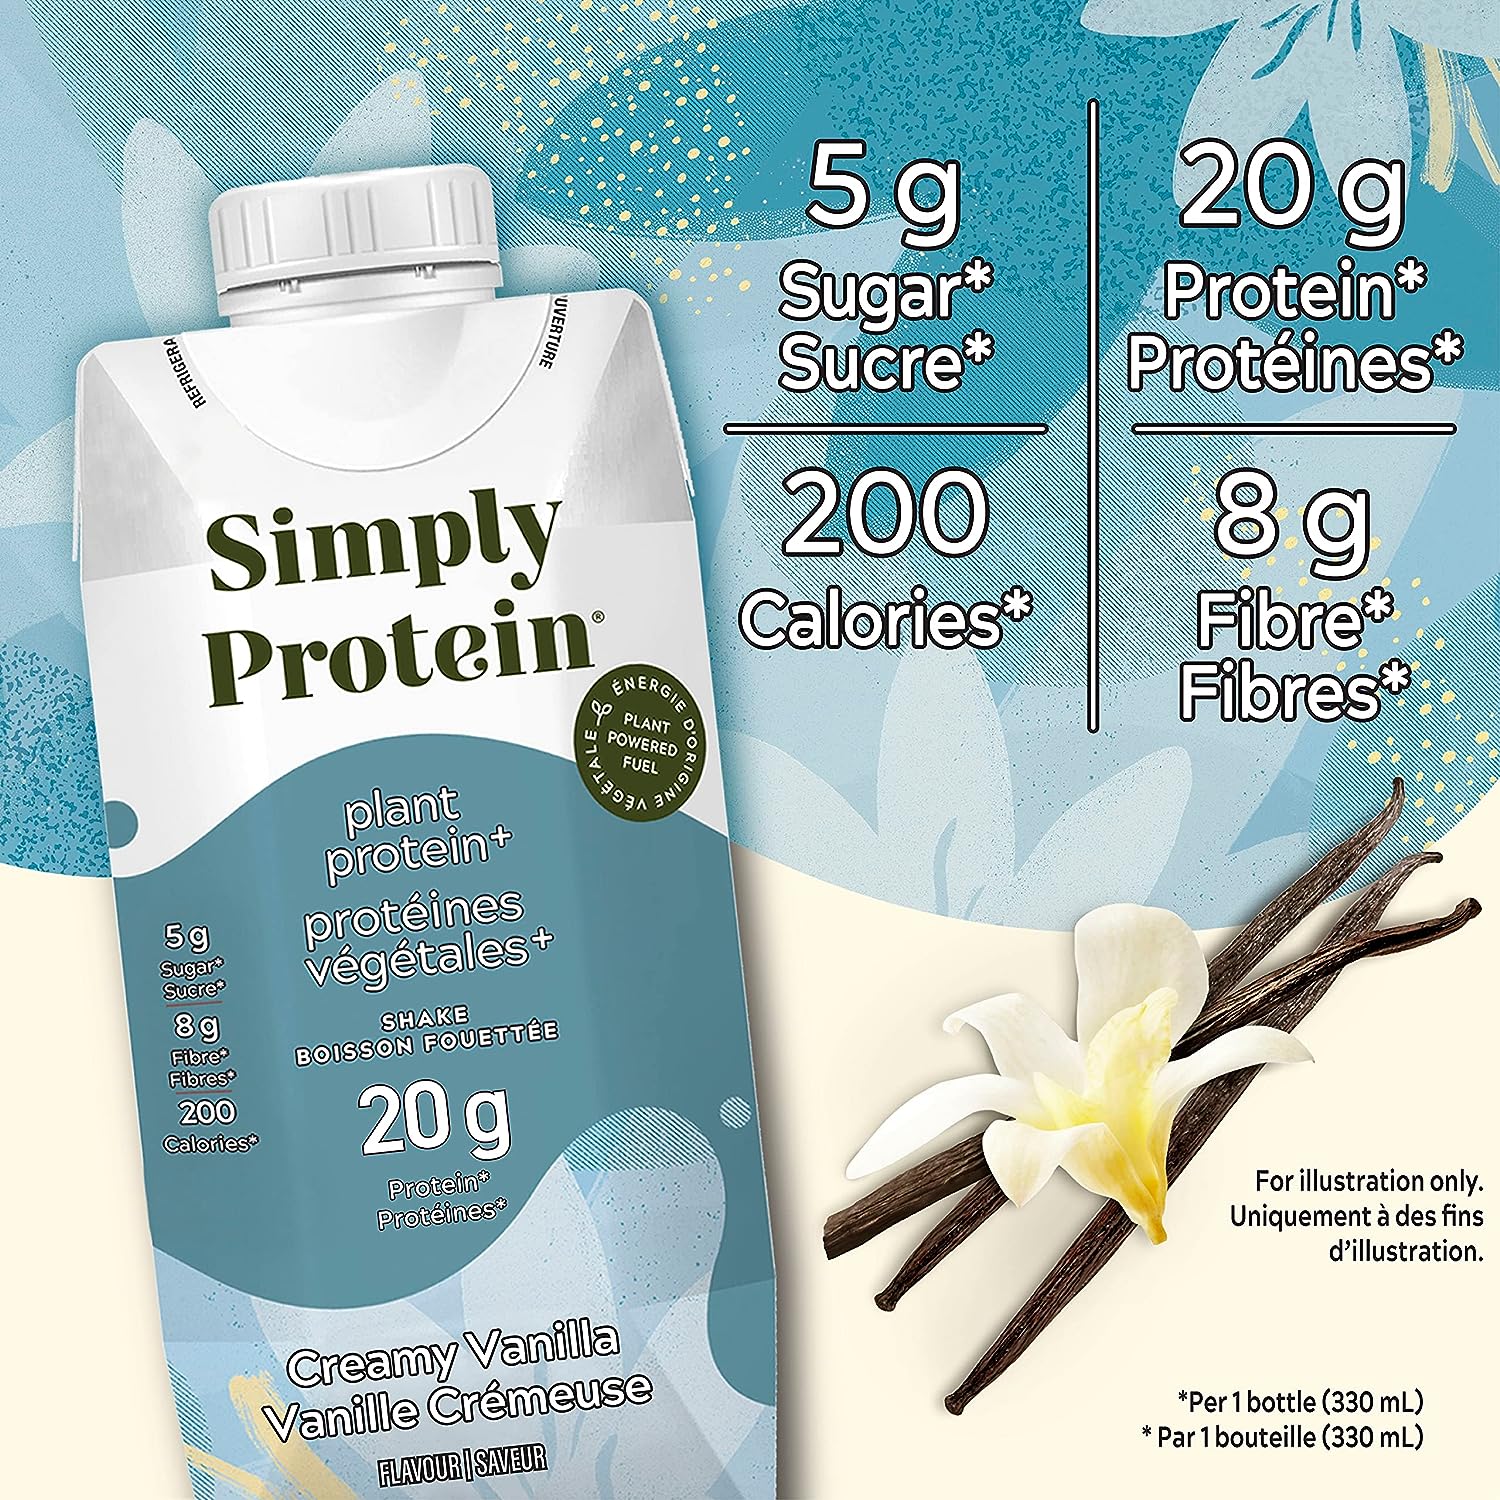 SimplyProtein Plant Protein+ Shake (330 ml) Drink Creamy Vanilla SimplyProtein